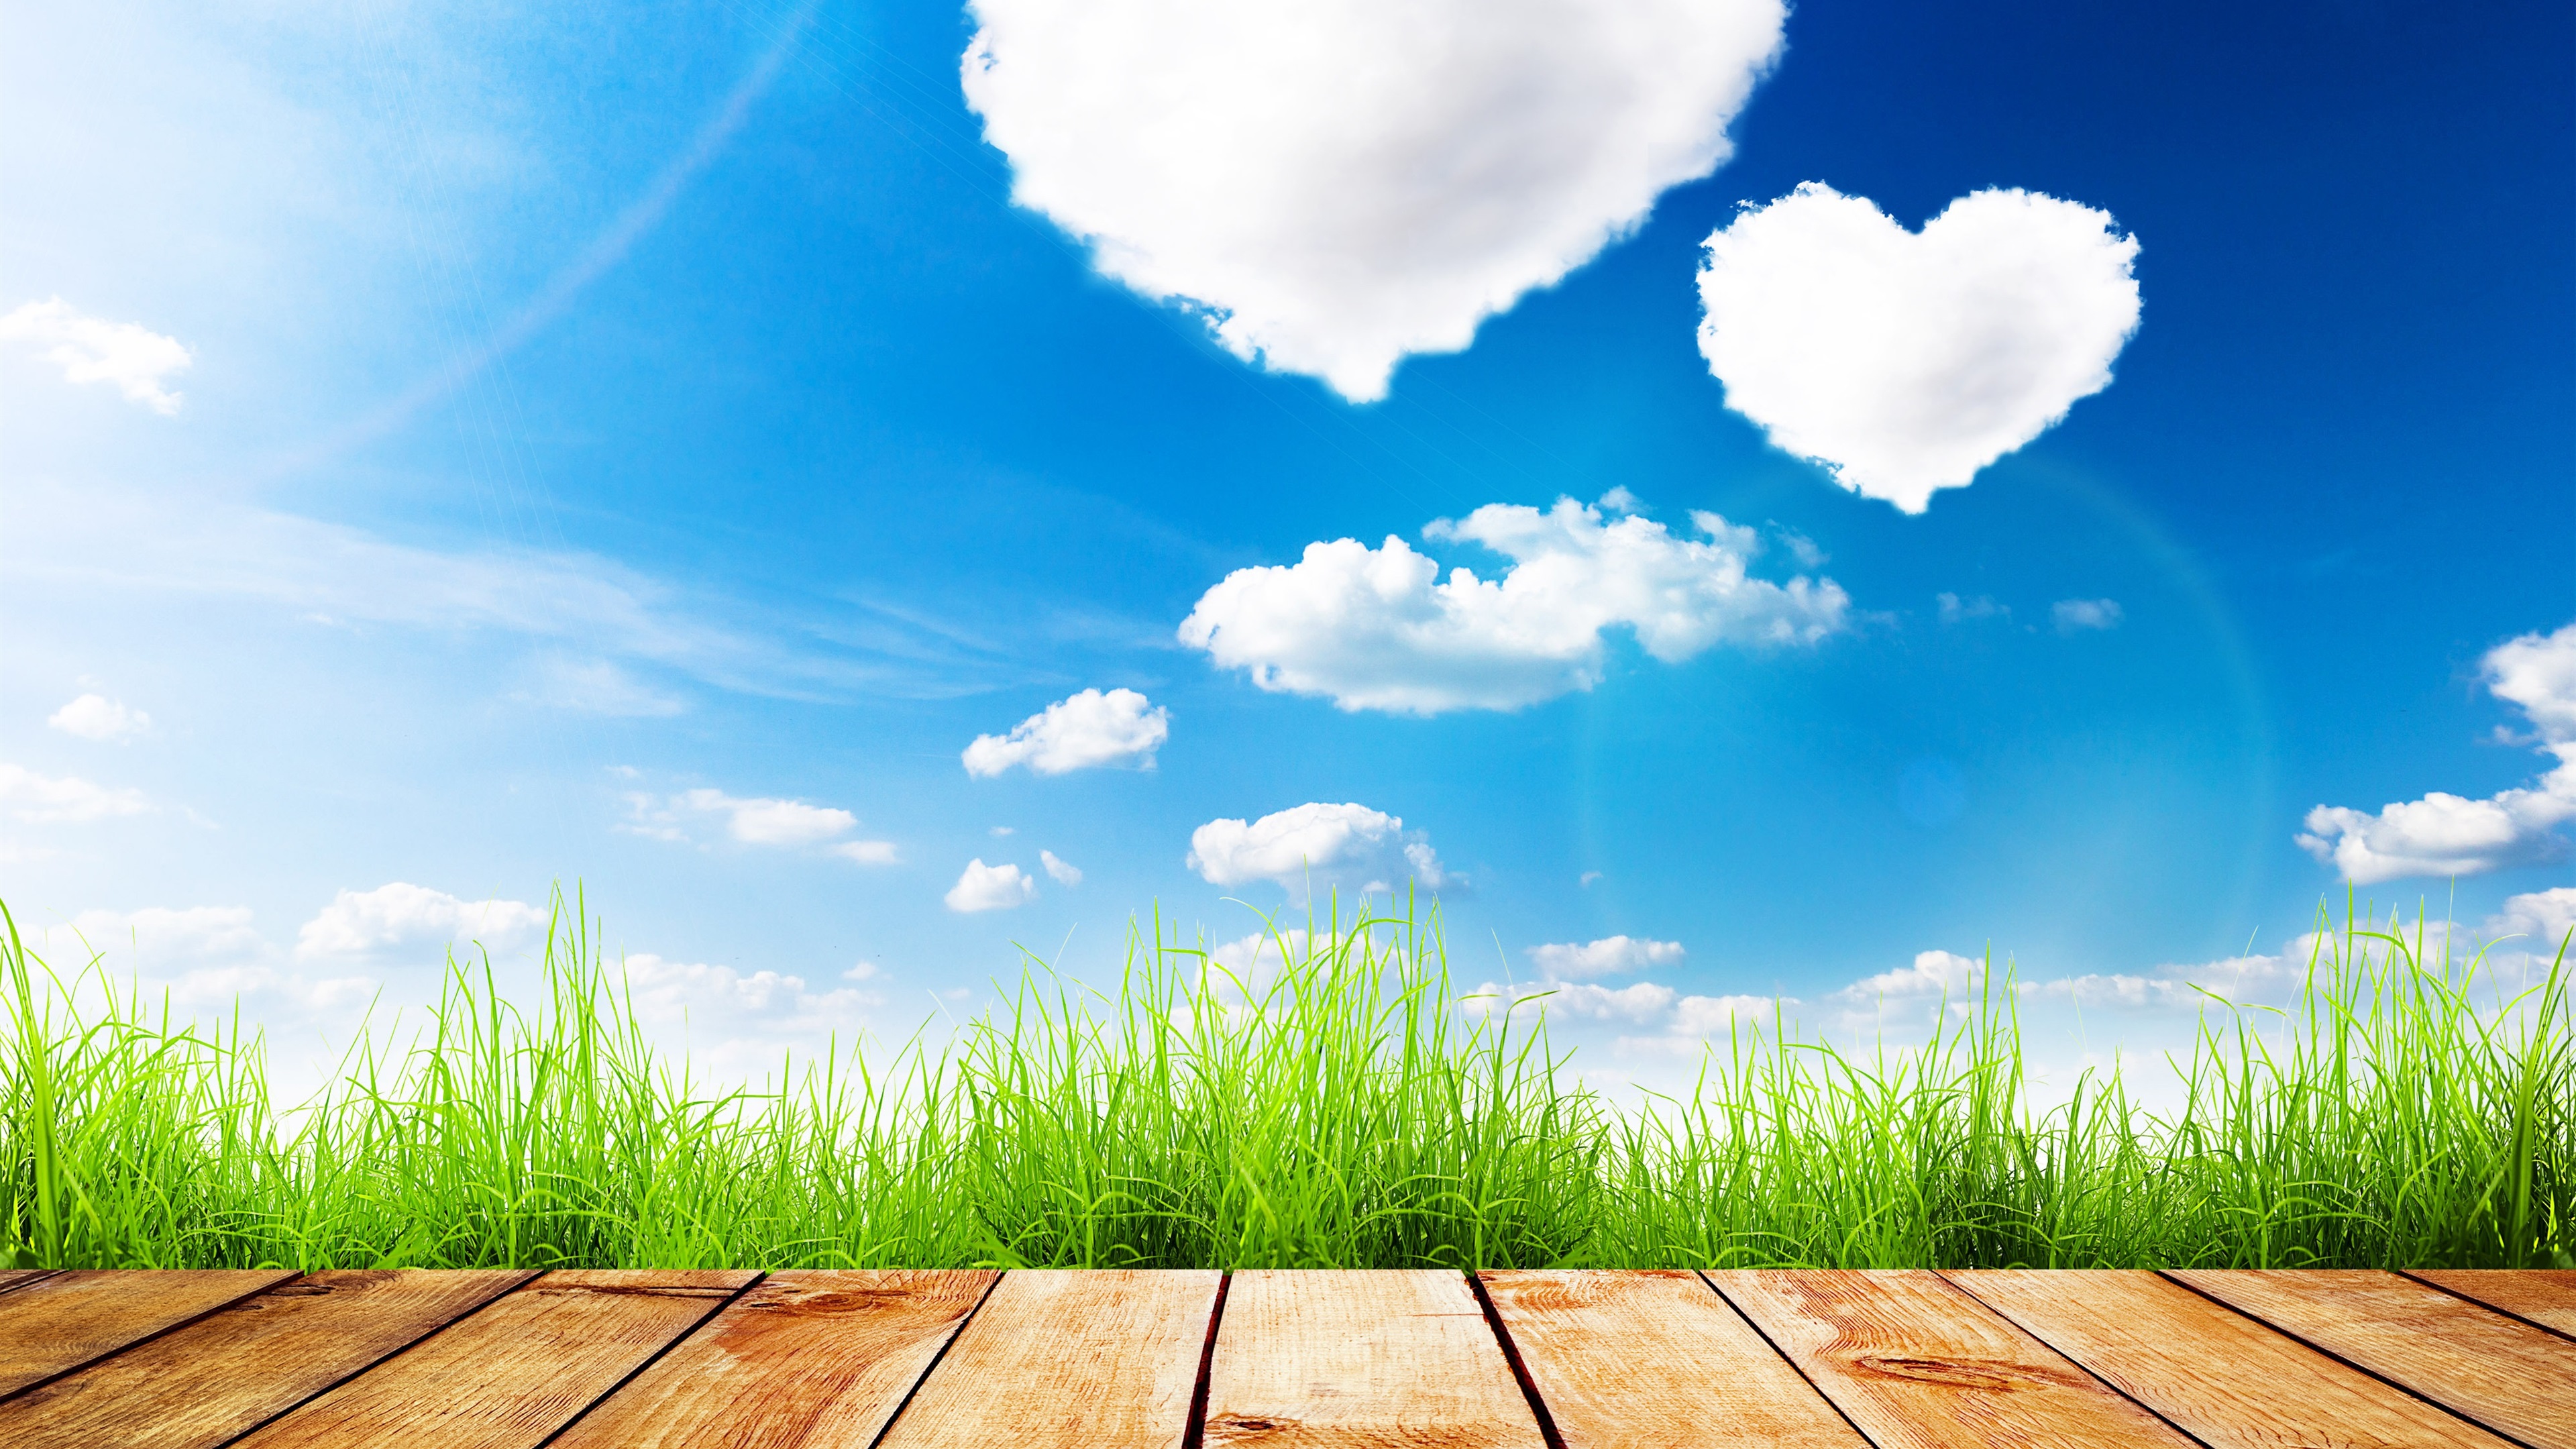 Wallpaper Summer, blue sky, love heart clouds, grass, wood board 3840x2160 UHD 4K Picture, Image